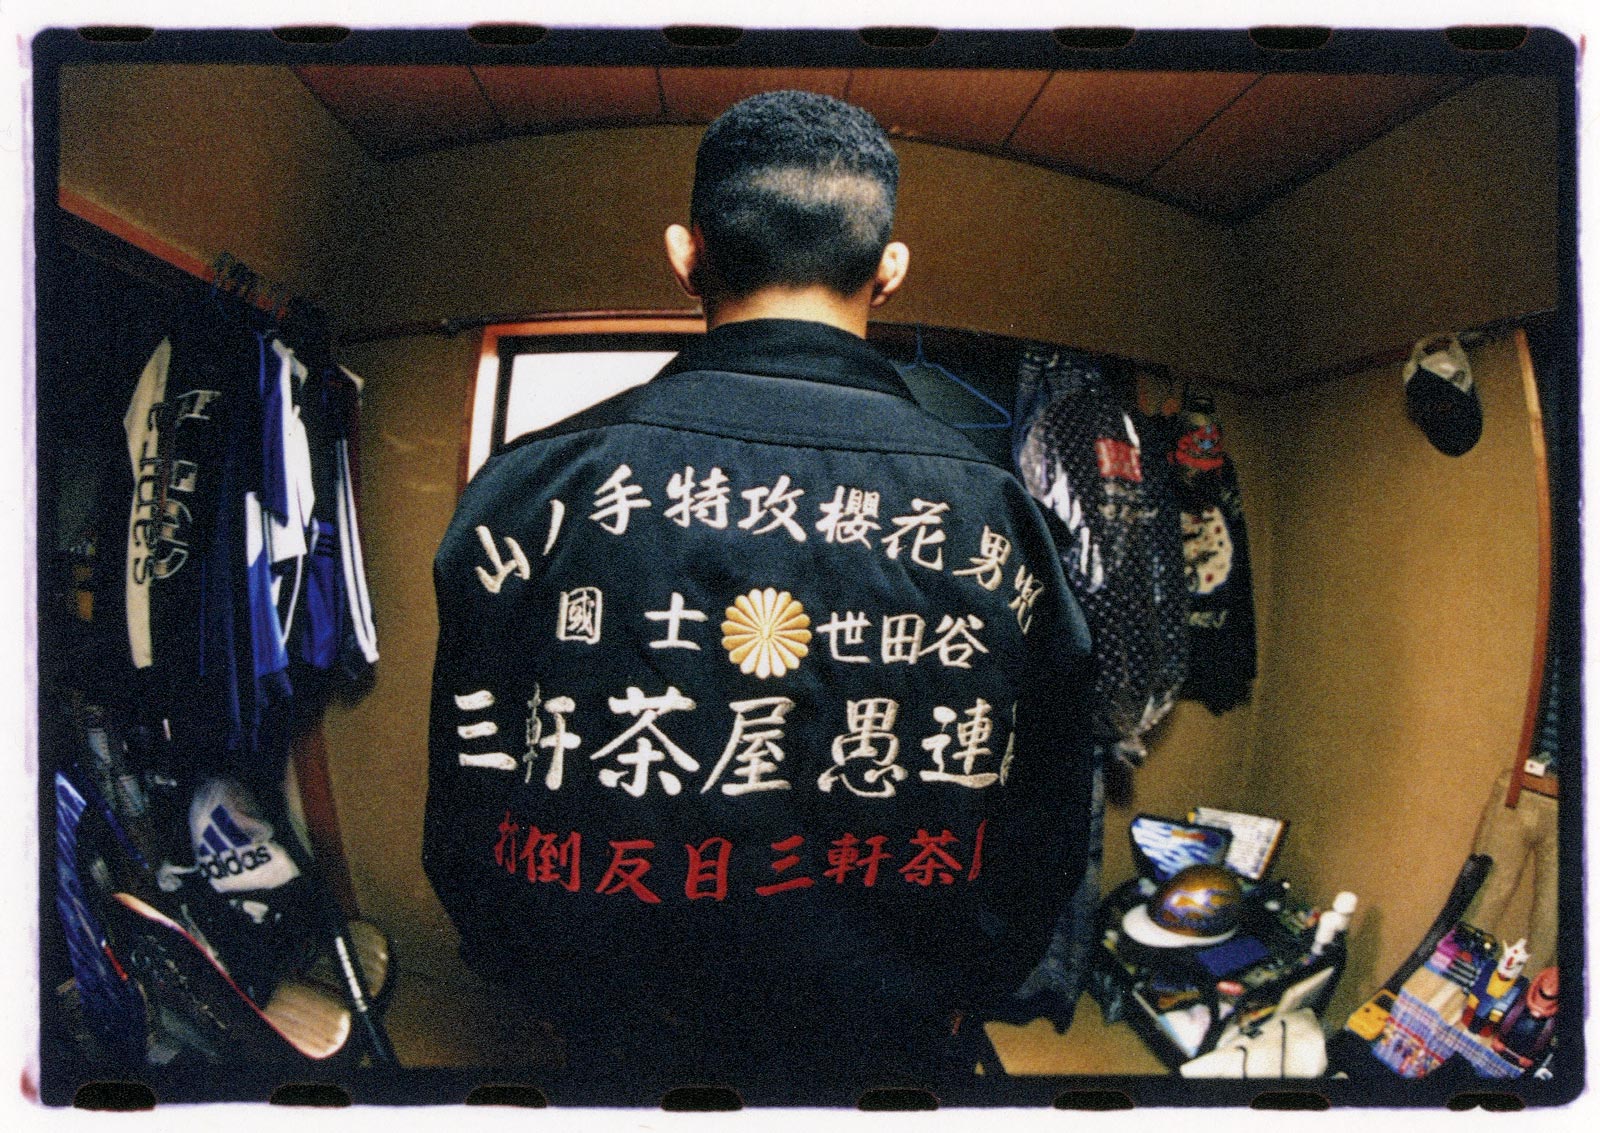 bosozoku-the-stylish-legacy-of-japans-rebel-motorcycle-gangs-8